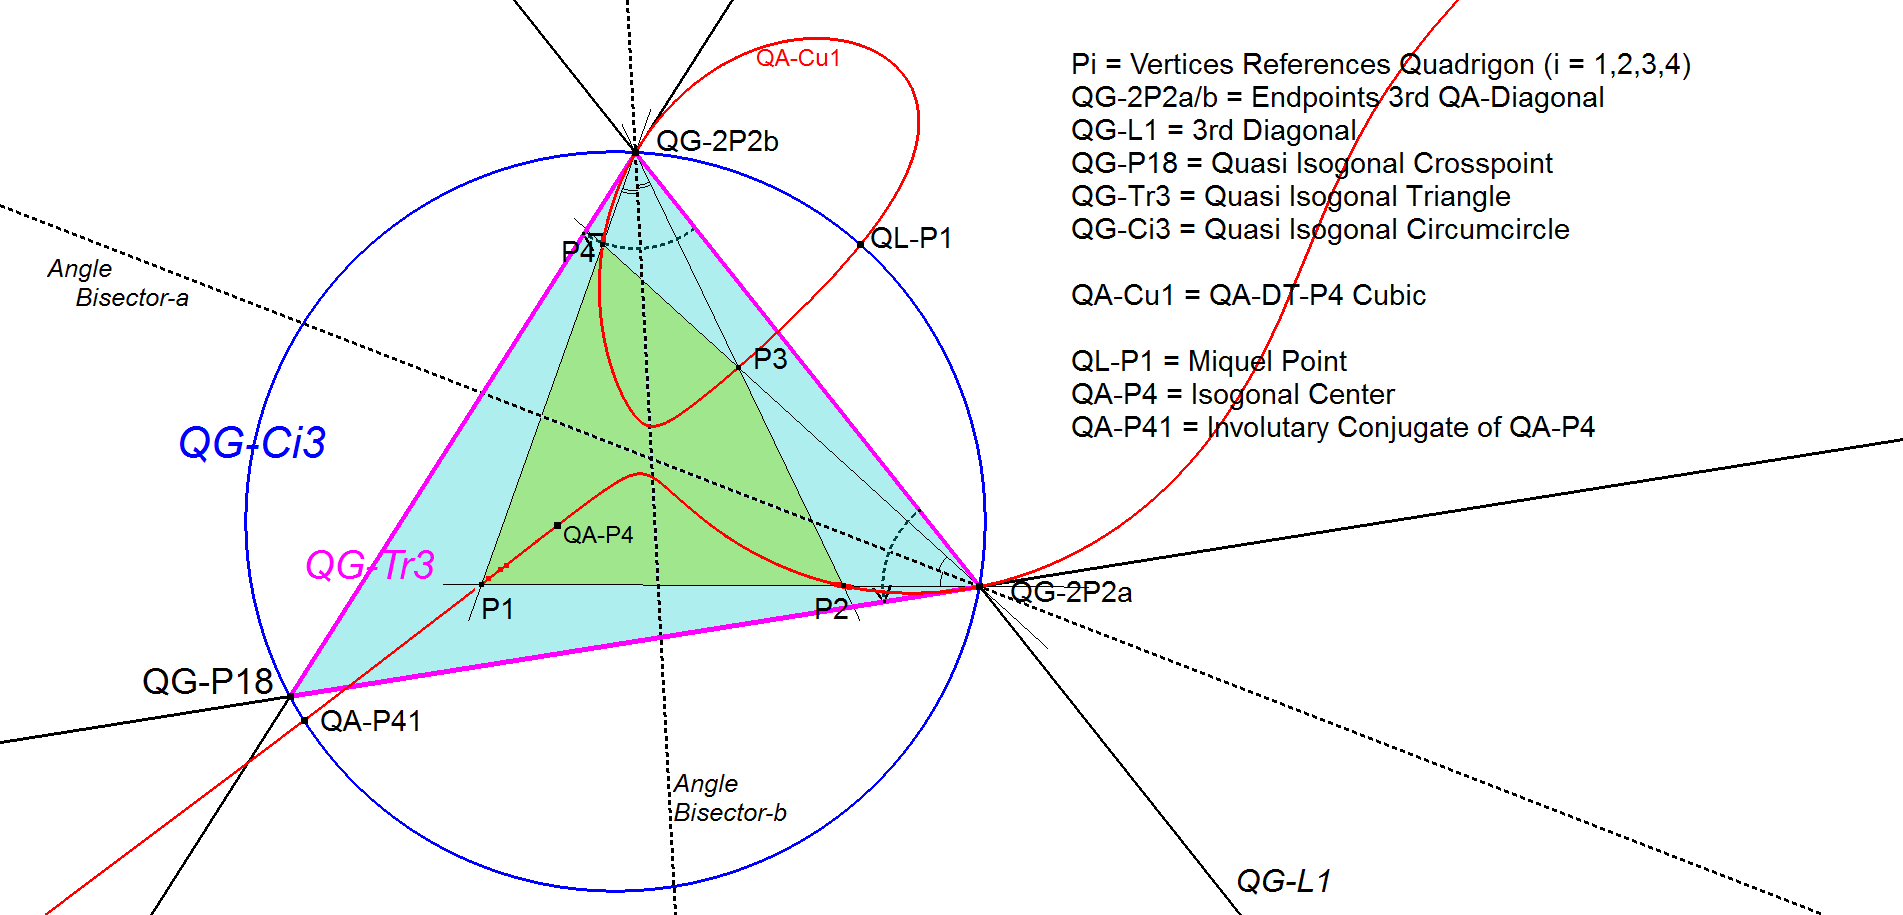 QG-Ci3-Quasi Isogonal Circumcircle-02